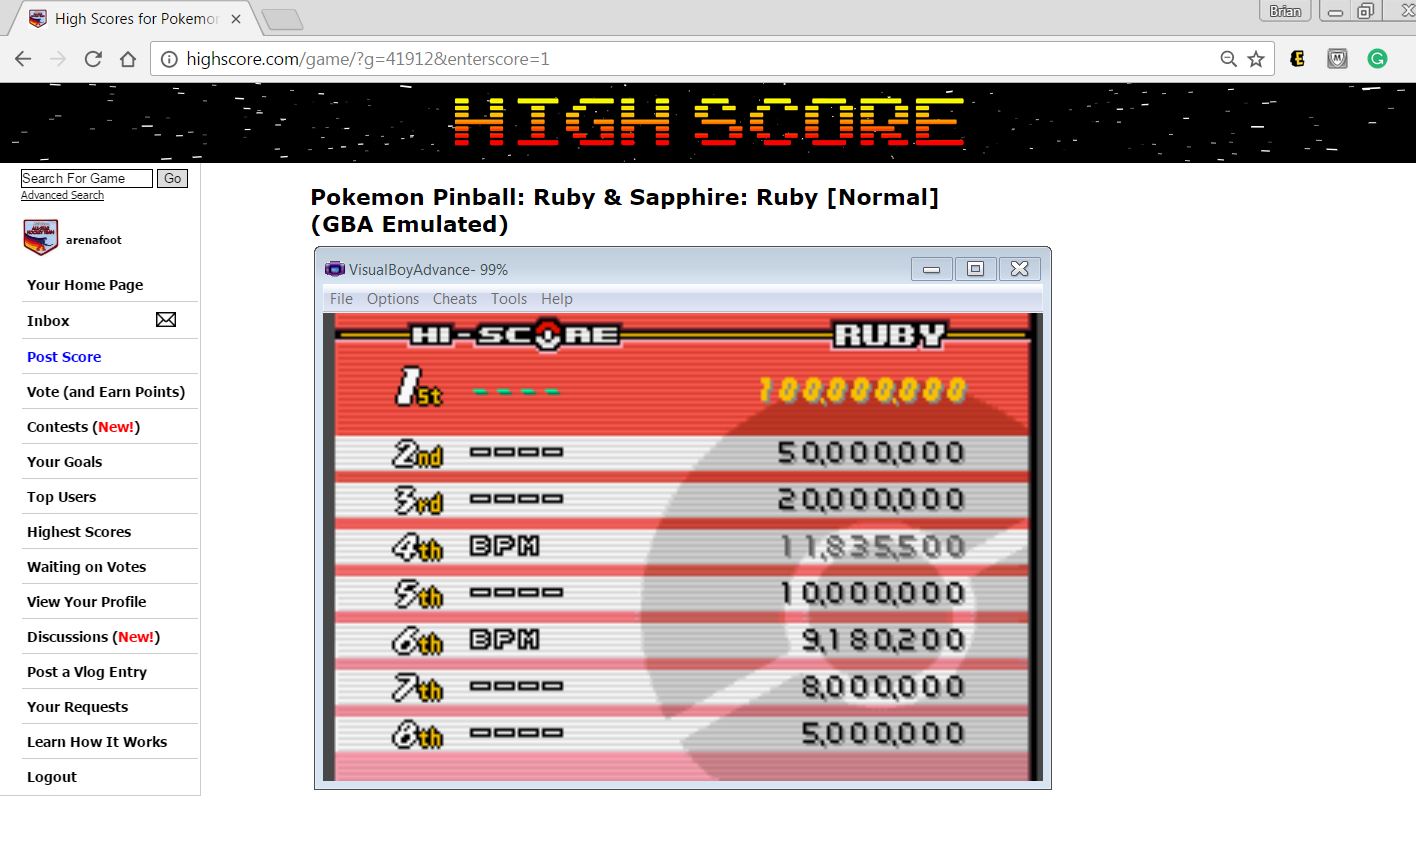 Pokemon Pinball: Ruby & Sapphire: Ruby [Normal] 11,835,500 points